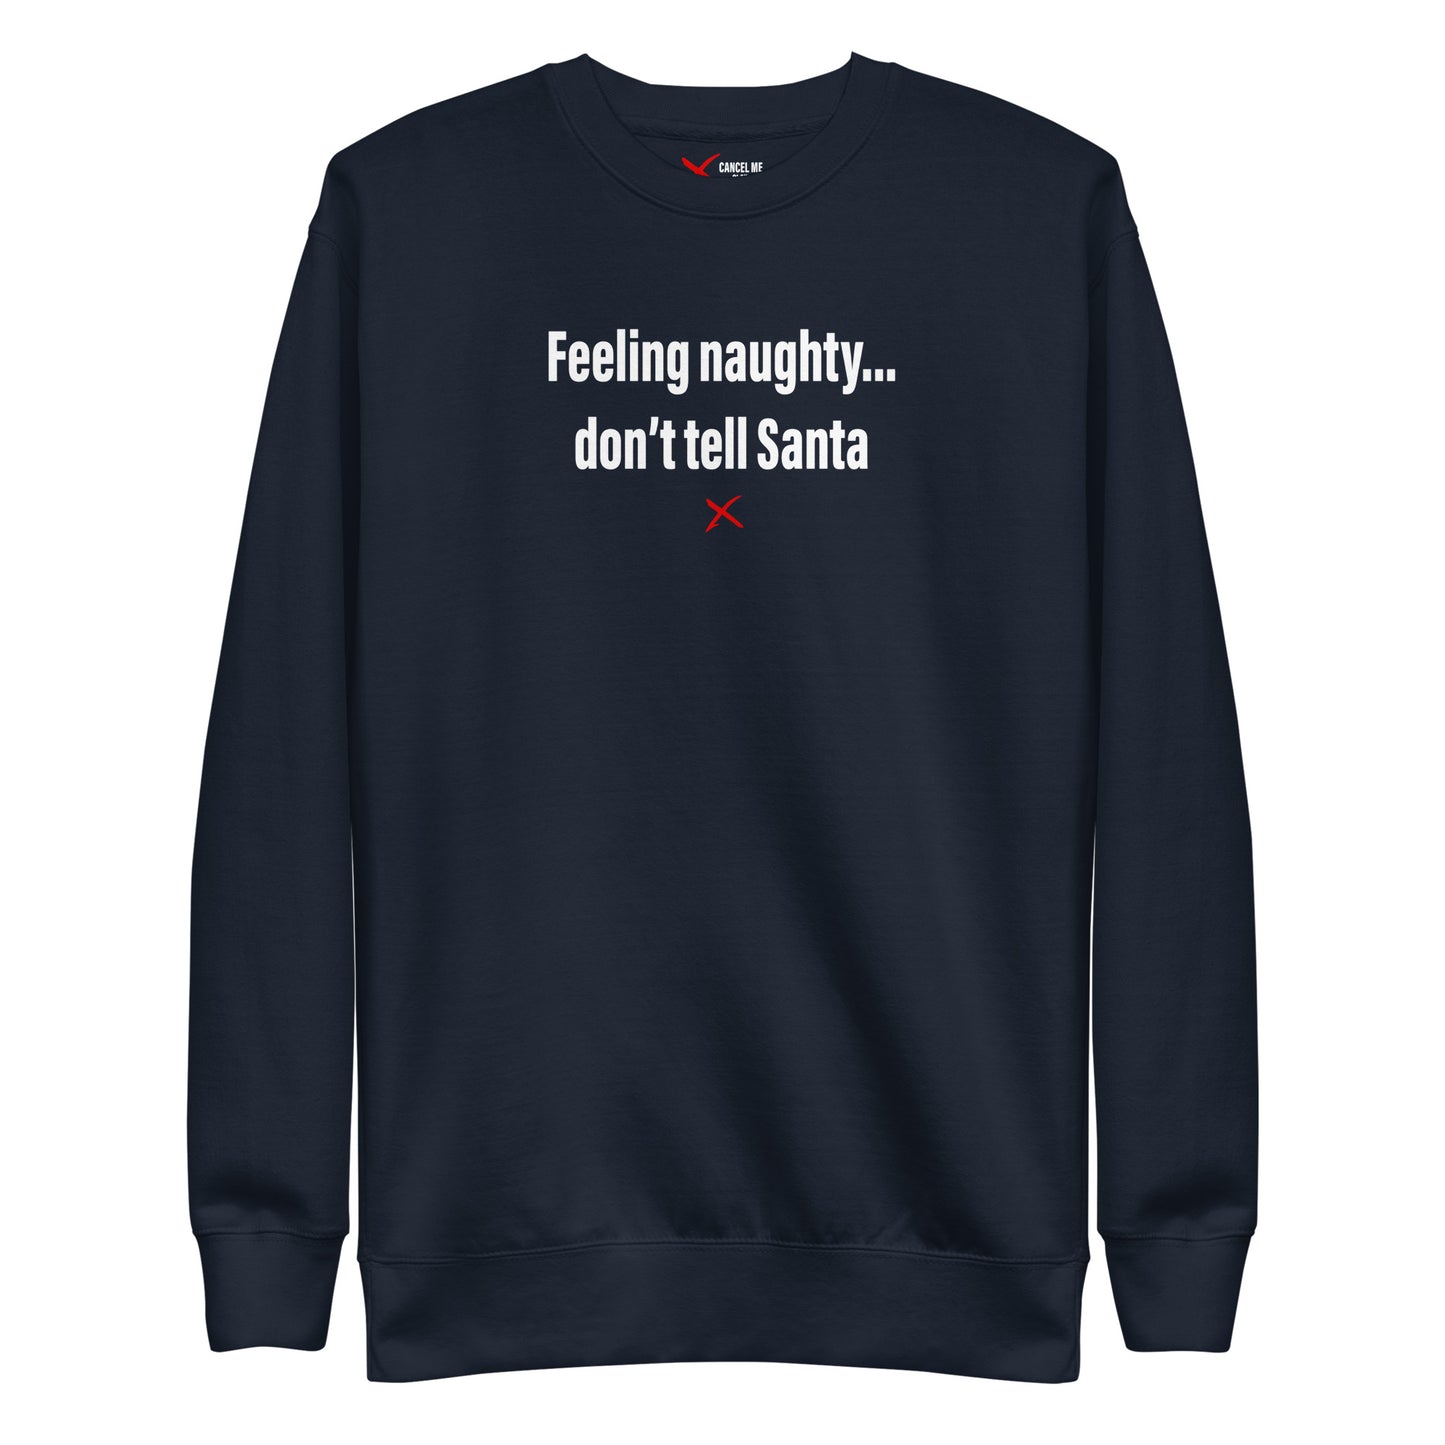 Feeling naughty... don't tell Santa - Sweatshirt